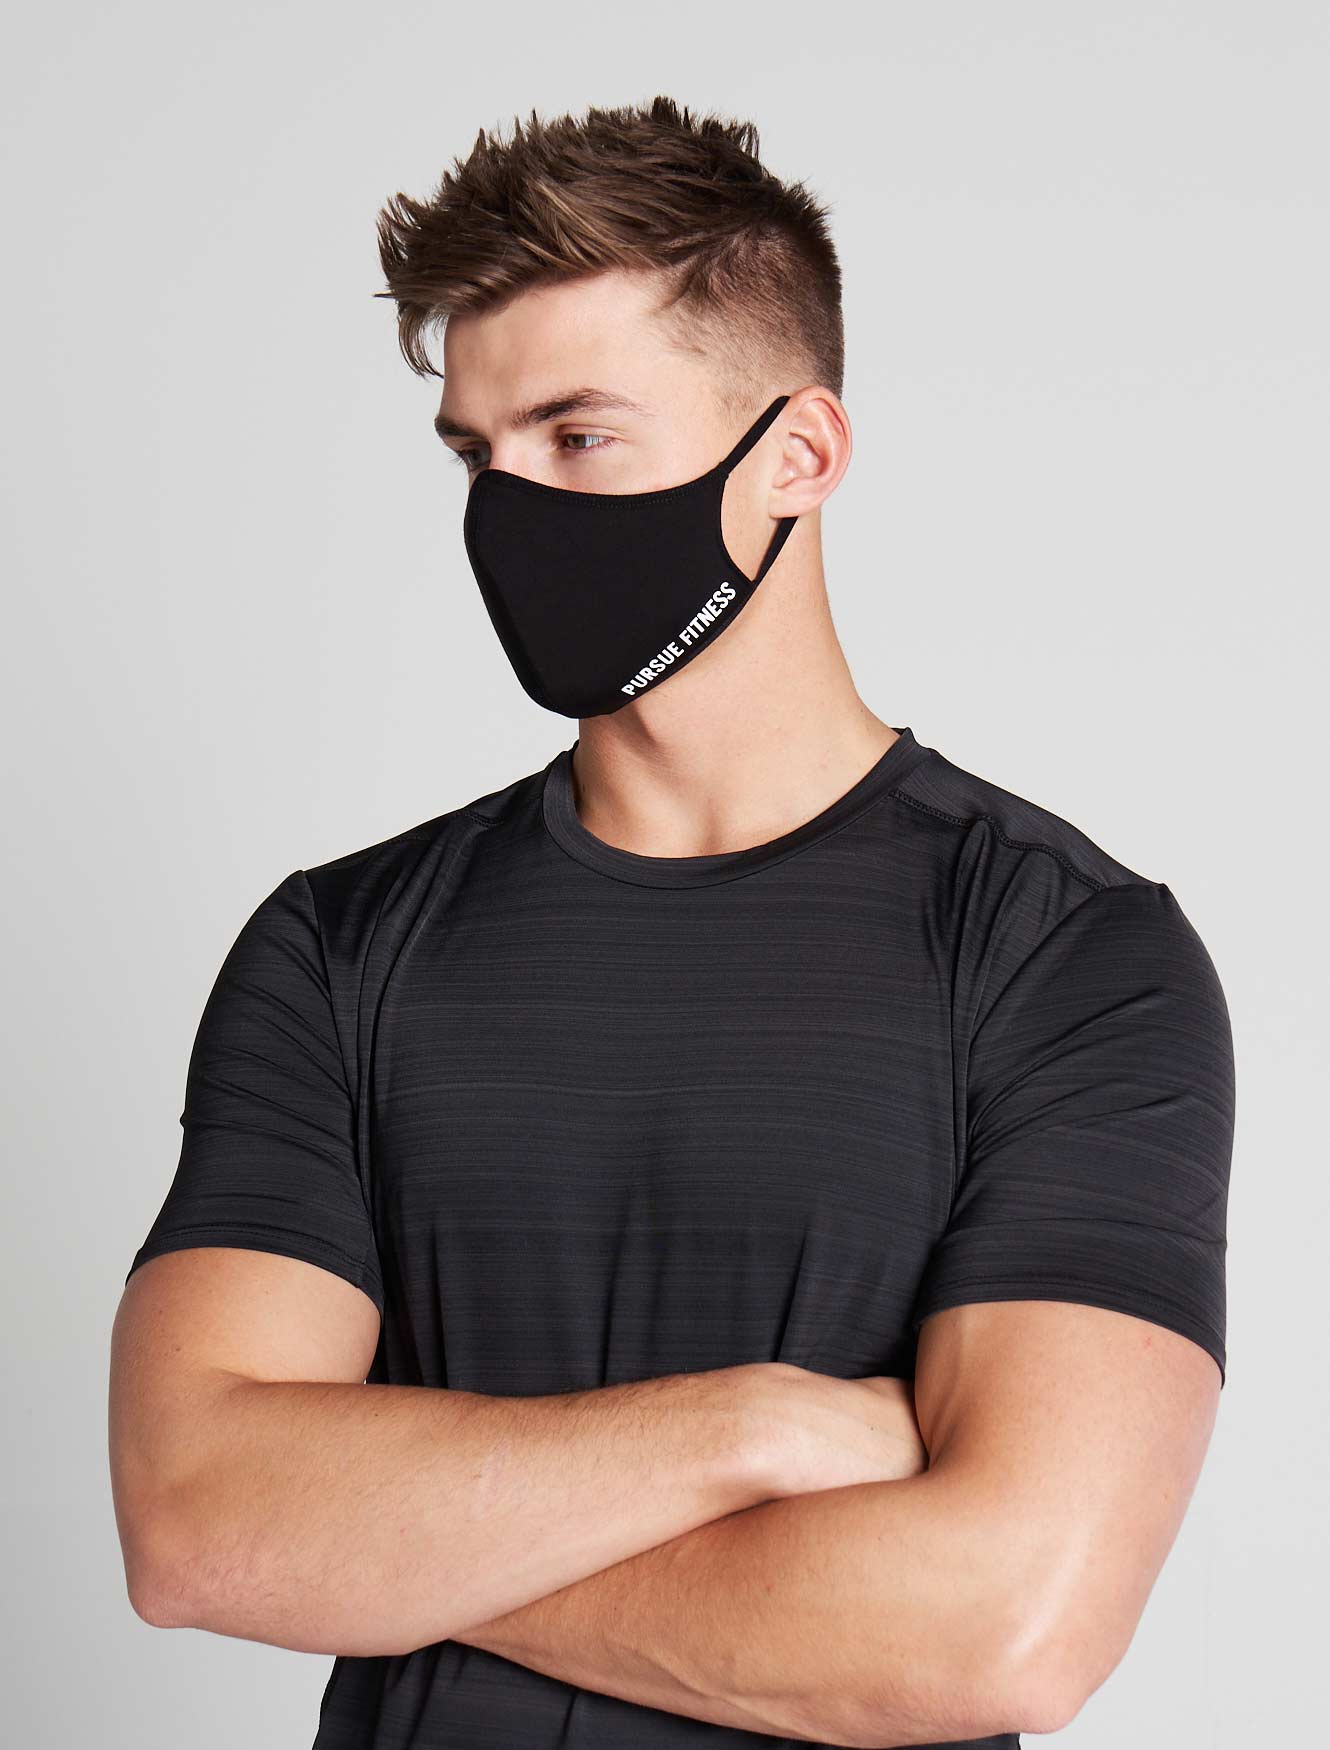 The Face Mask / Black (Unisex) Pursue Fitness 4